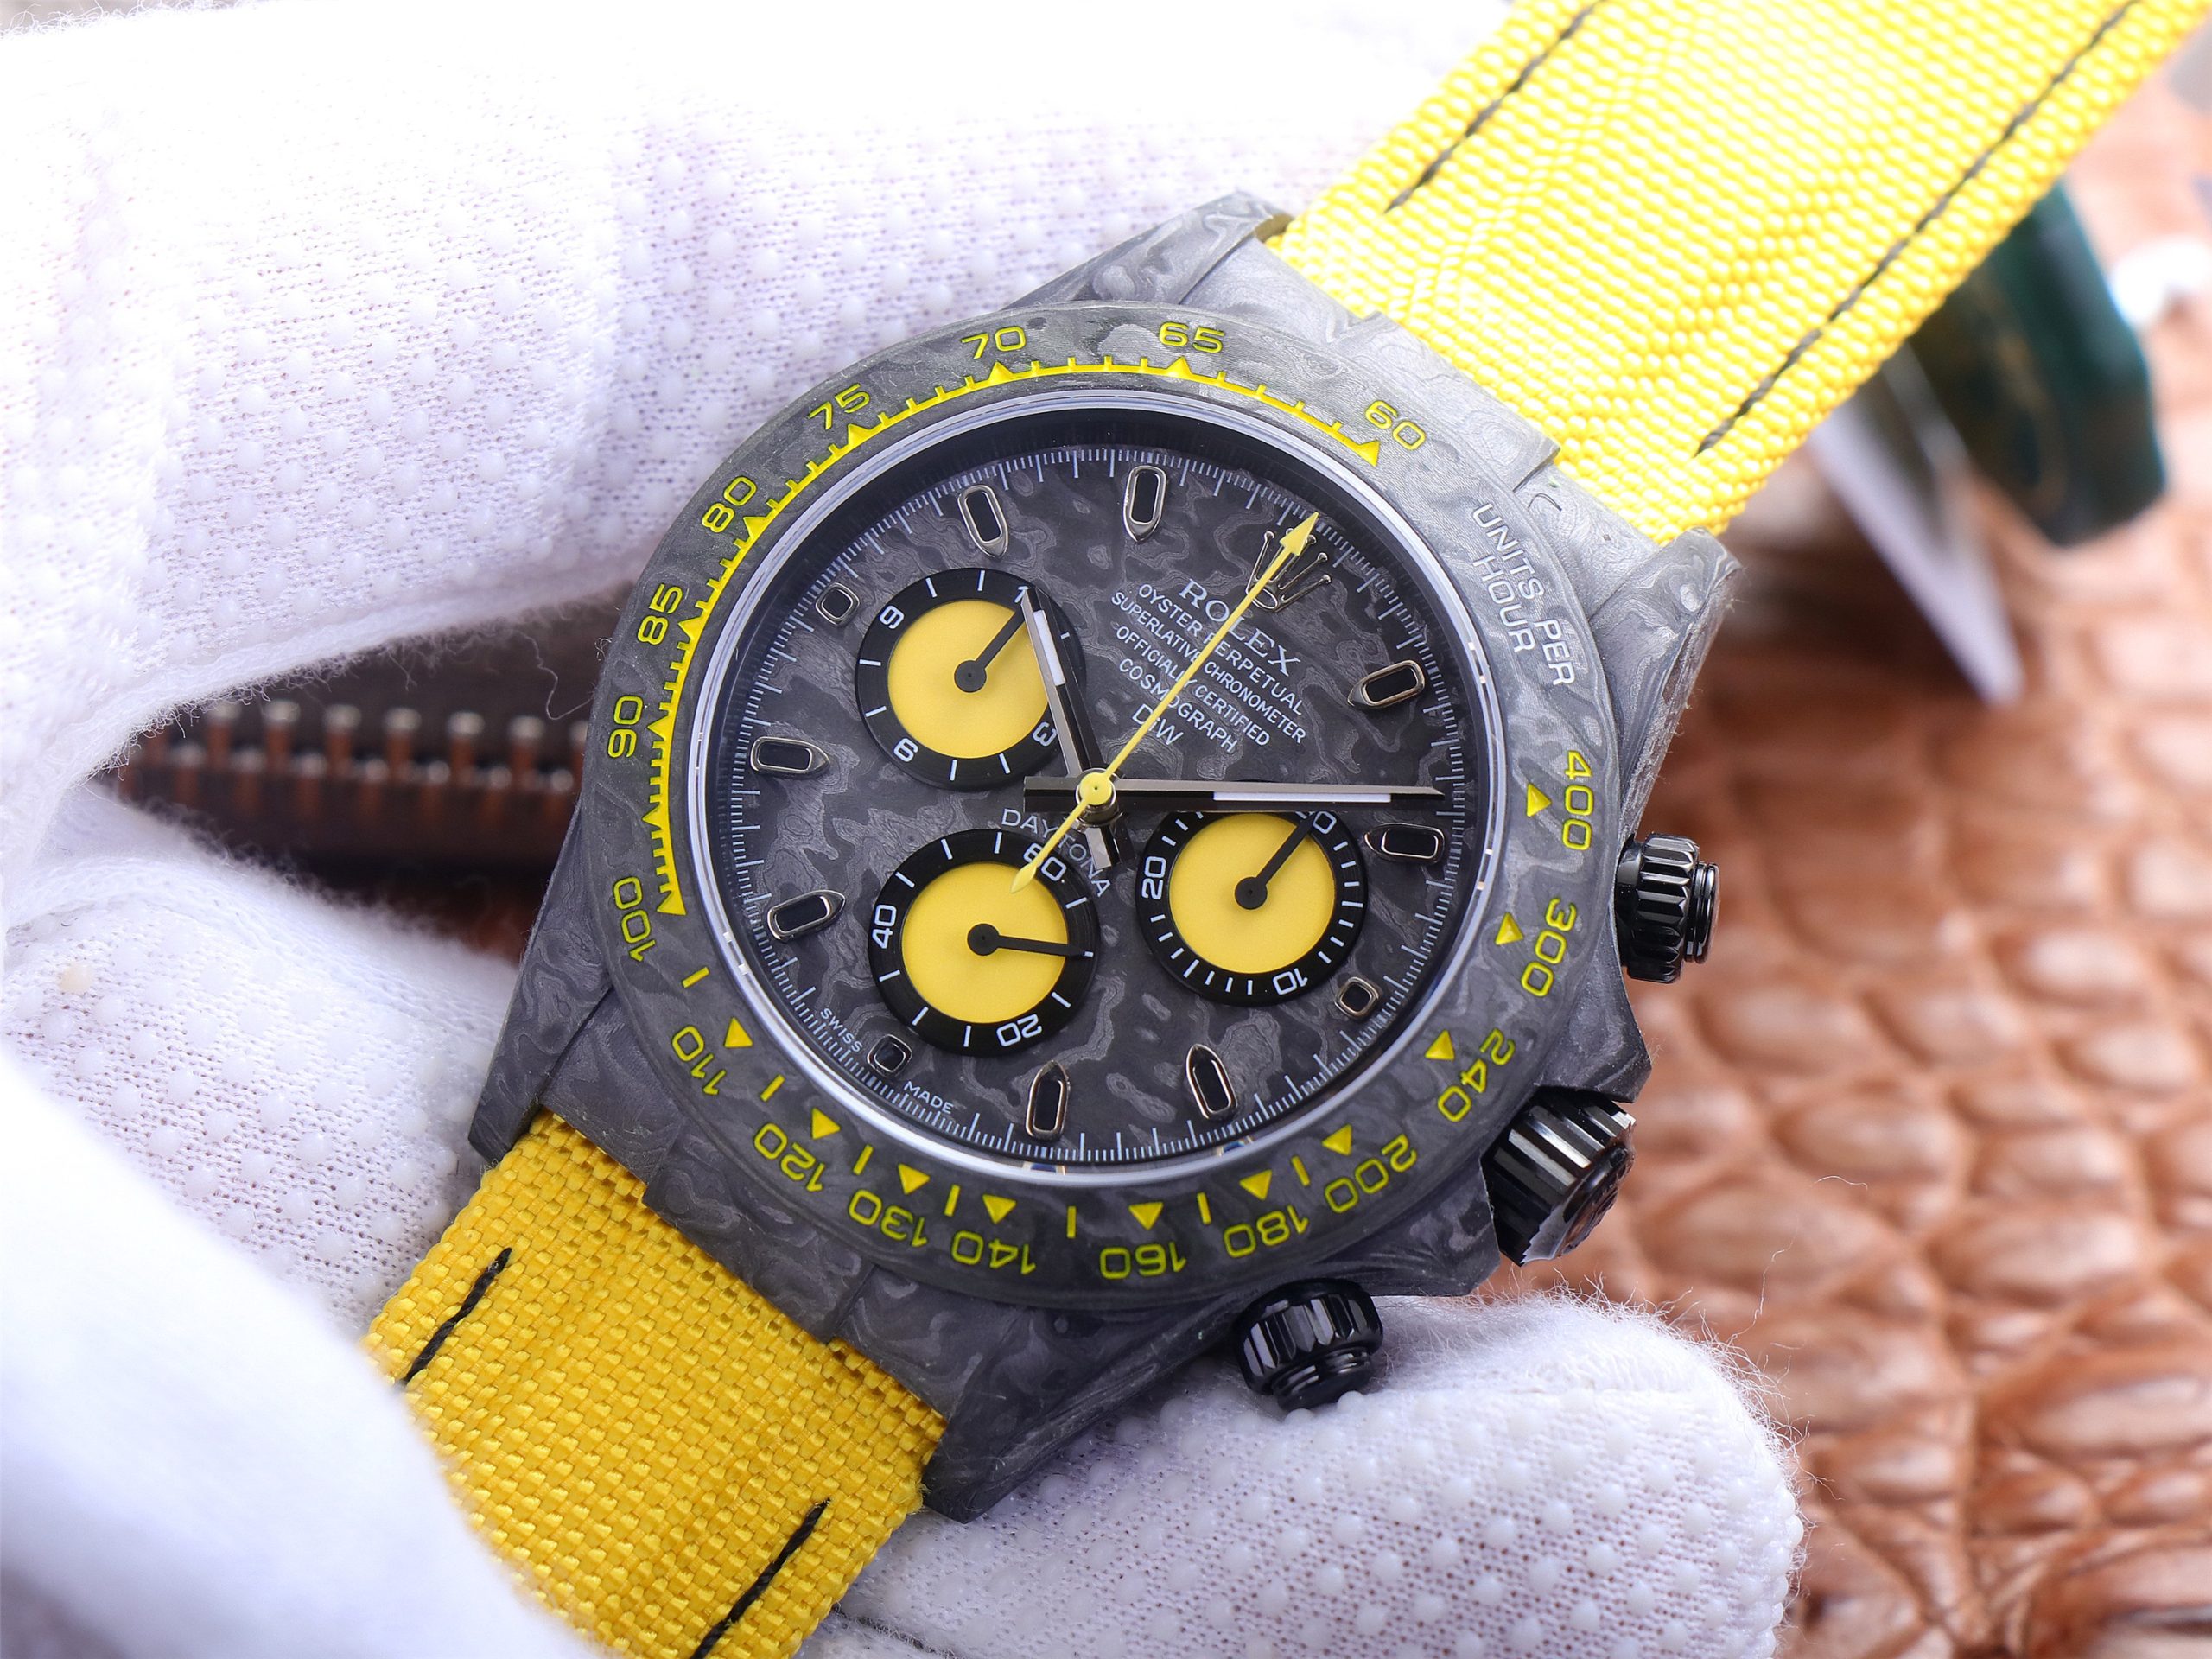 2023021204520453 scaled - 高仿彩色迪通拿手錶價格 JH廠手錶勞力士迪通拿碳纖維定制版 復刻錶￥4580